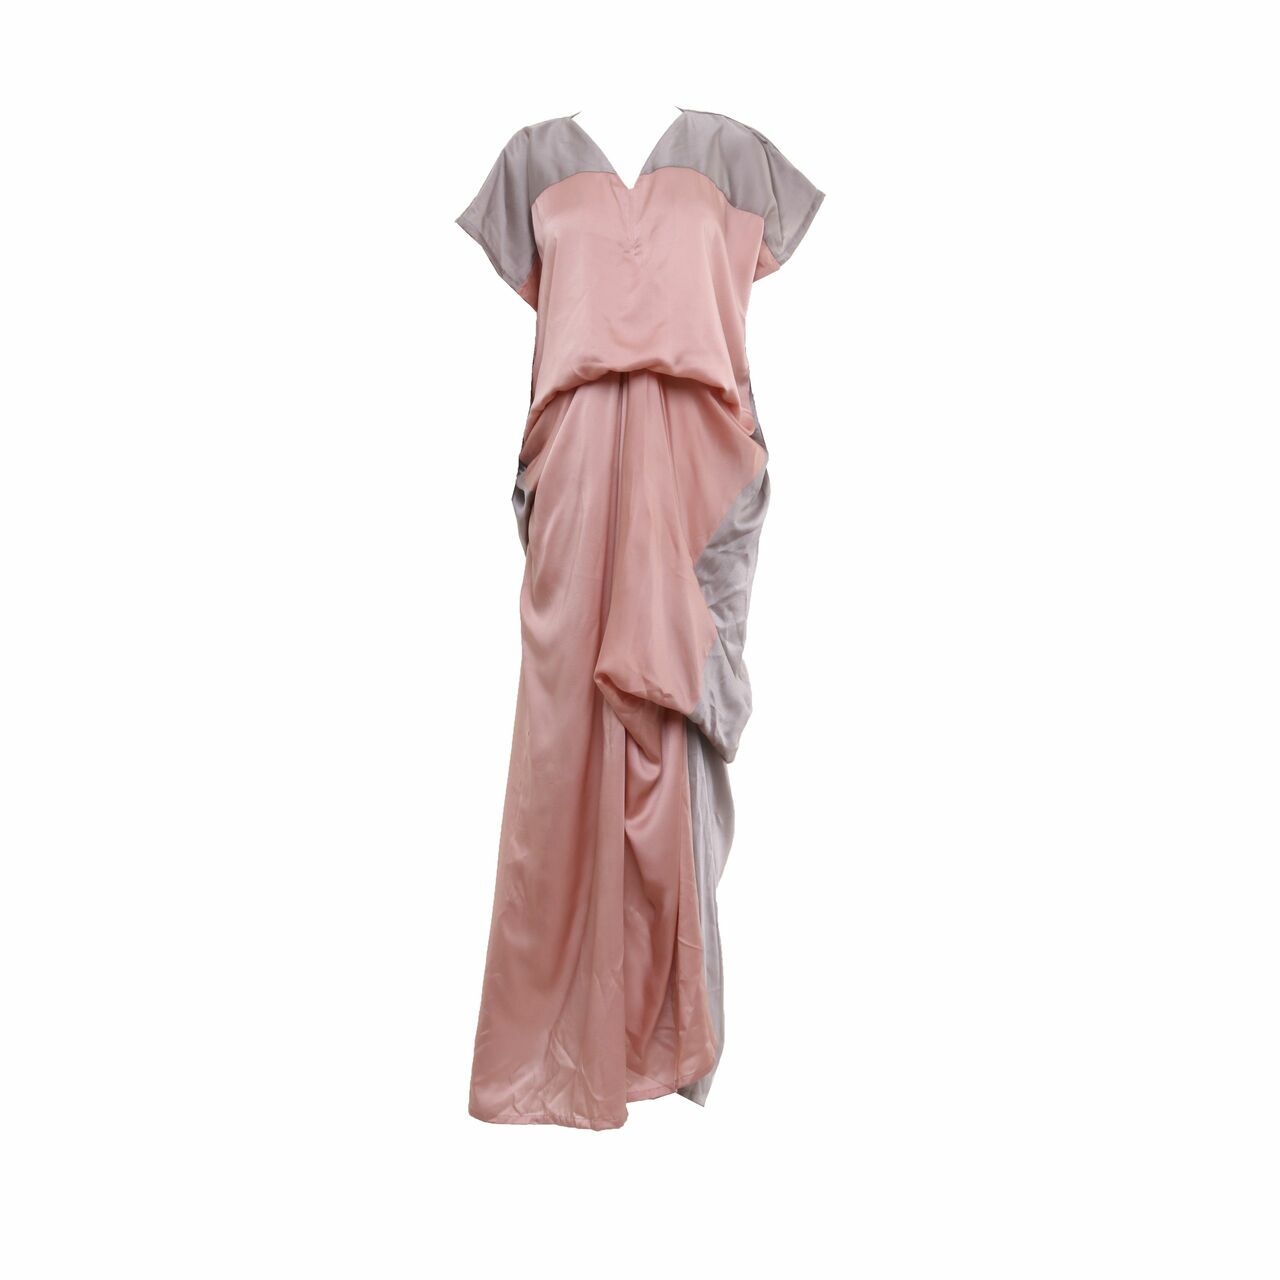 Soep Shop Grey & Pink Long Dress